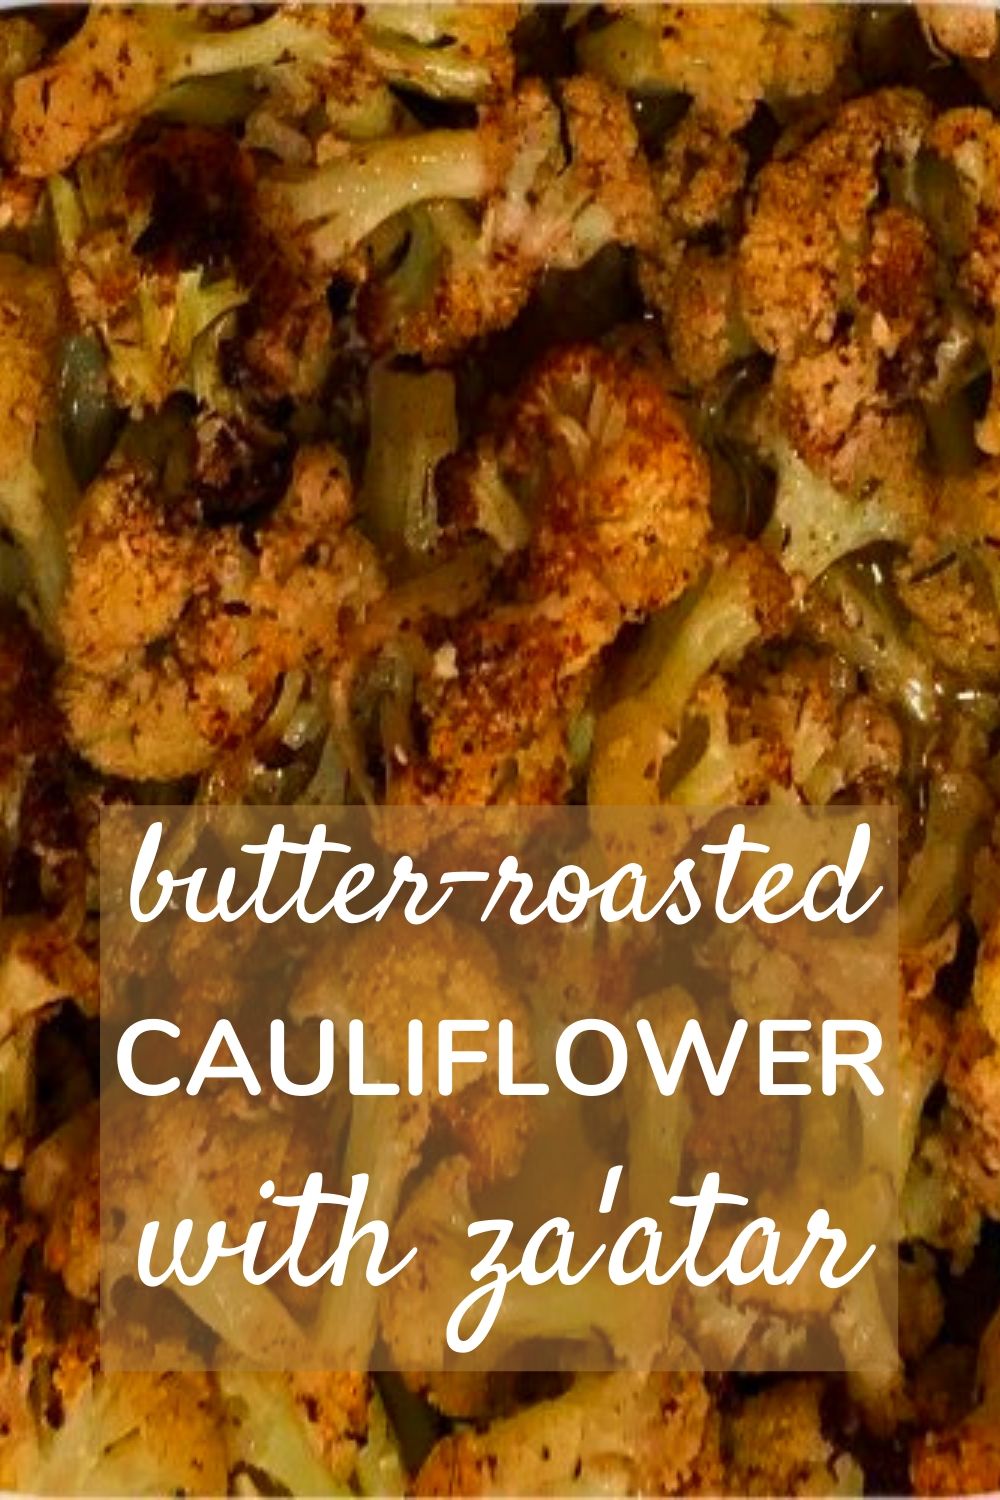 Roasted Cauliflower with Za\'atar